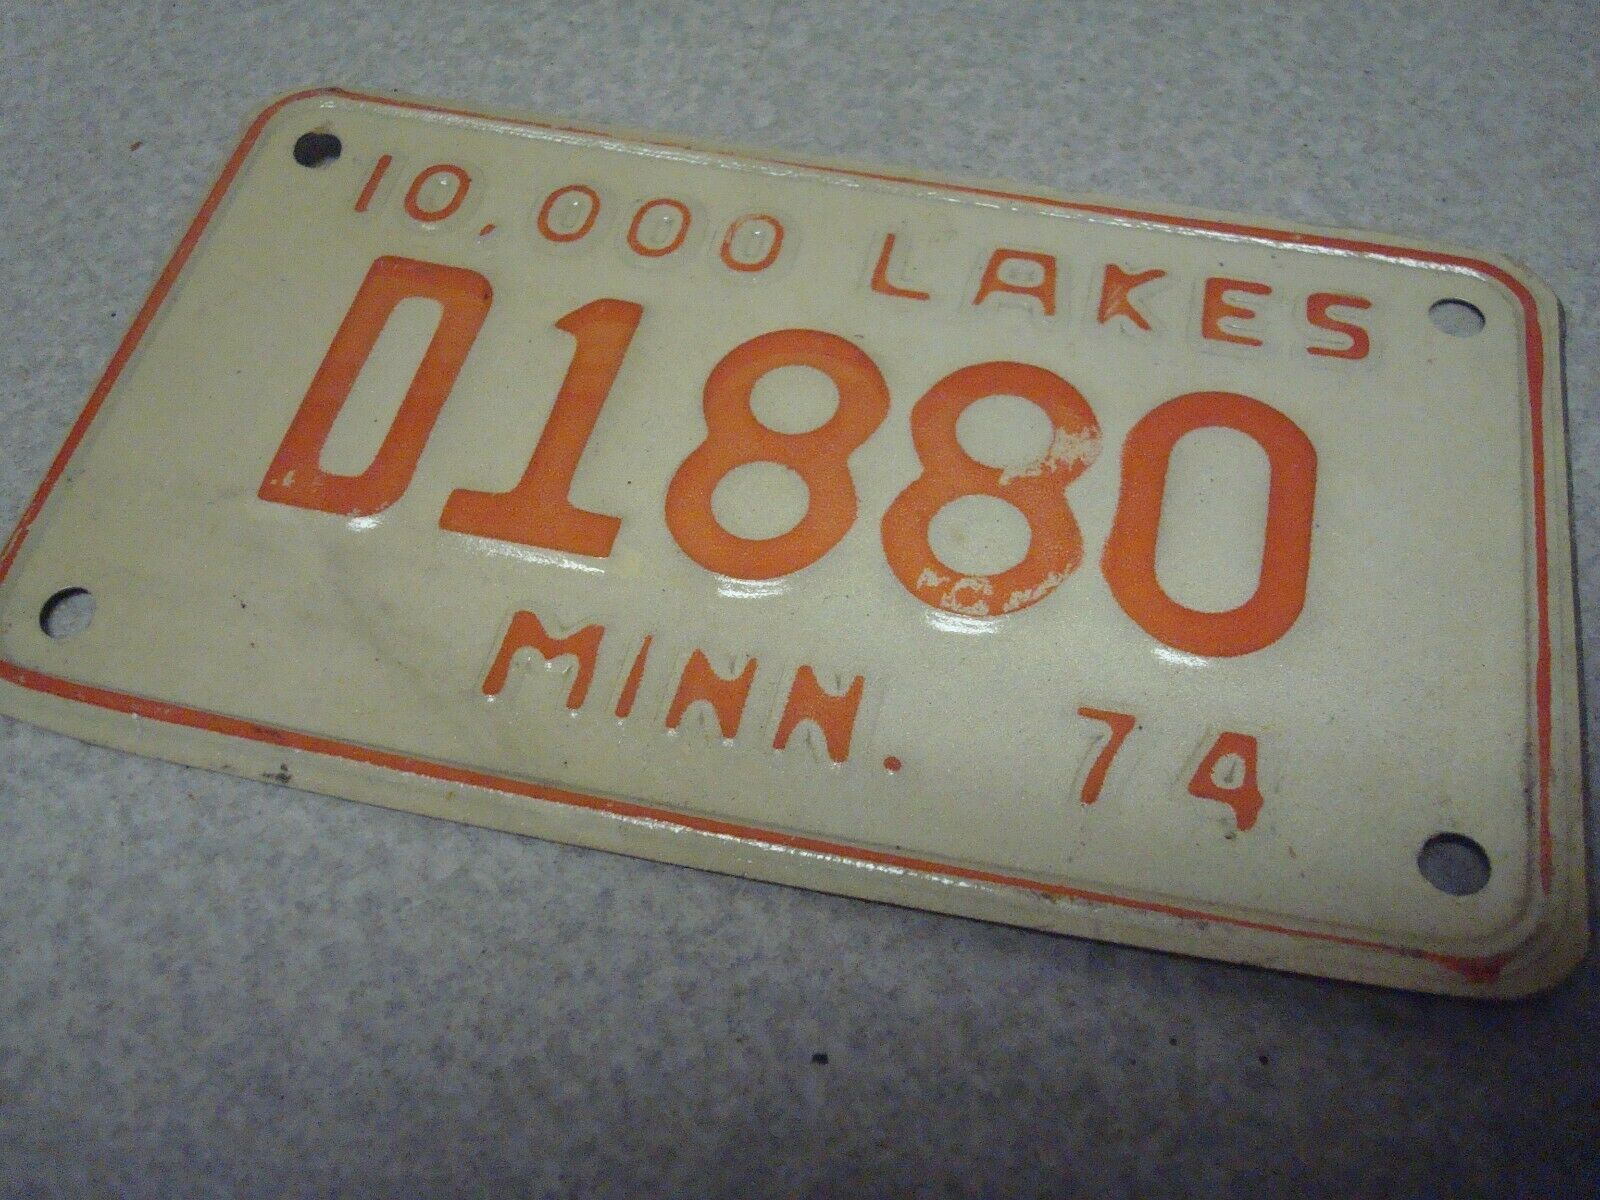 Vintage Minnesota 1974 Travel Trailer License Plate # D1880 Single Plate